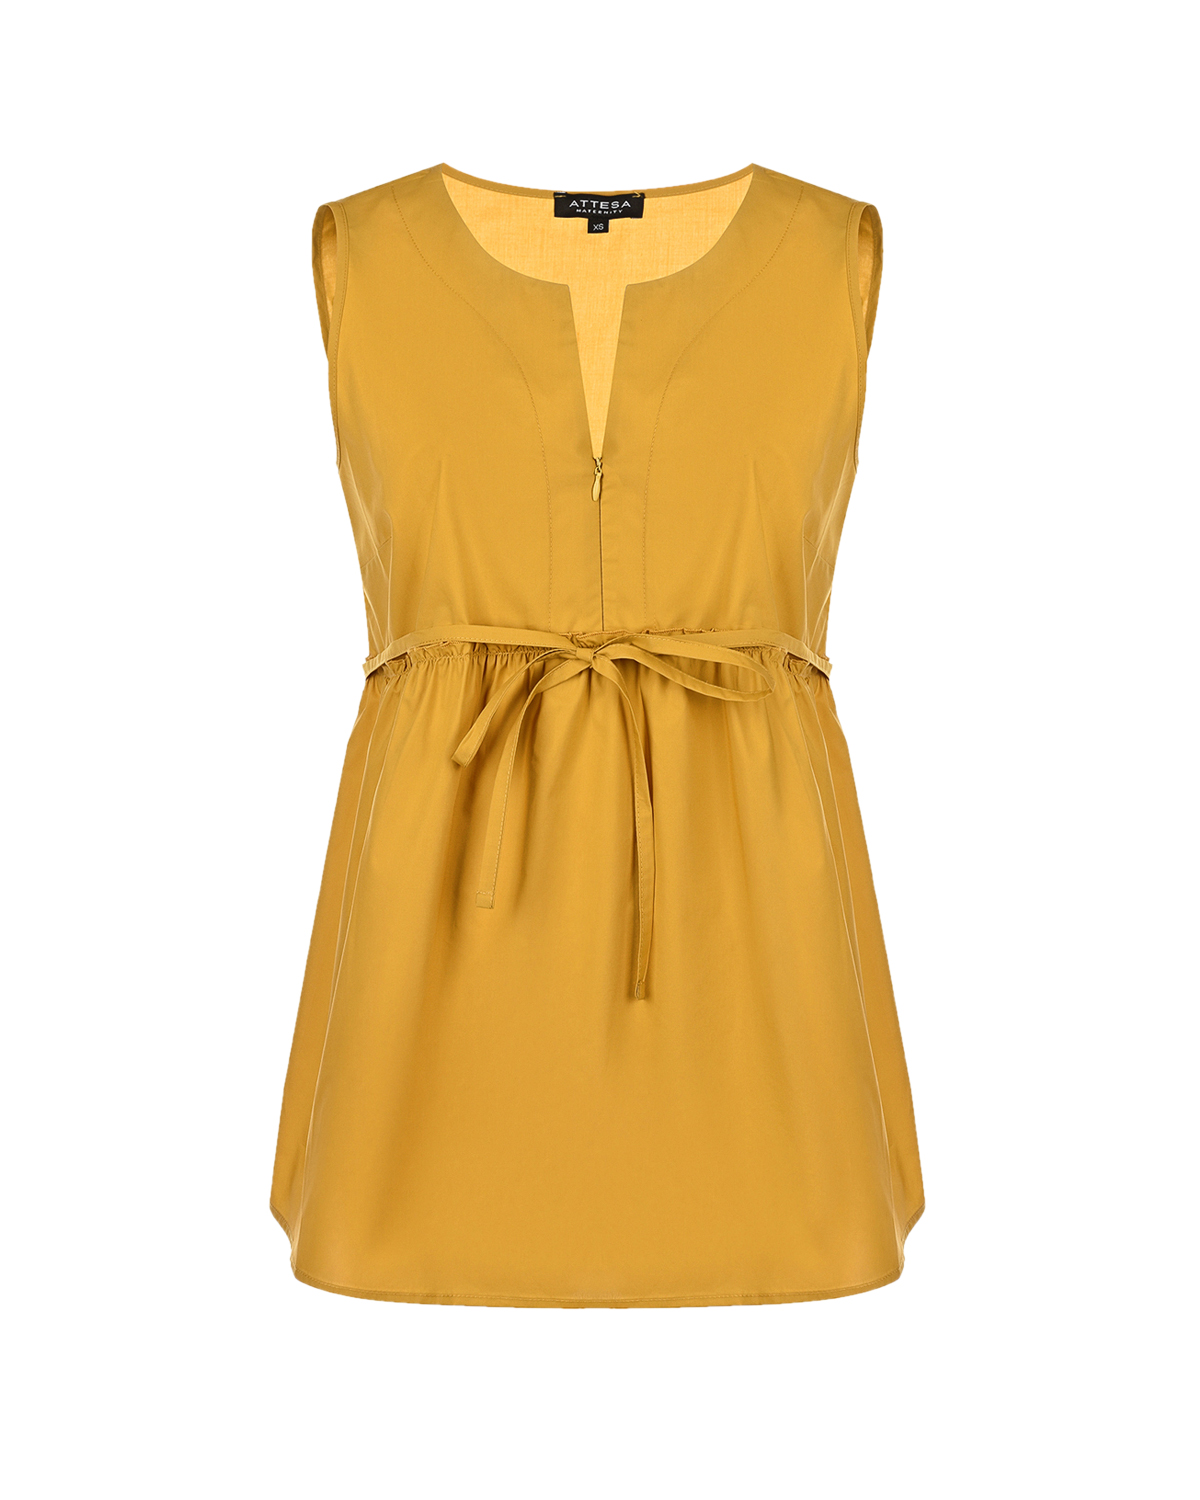 Желтая блуза без рукавов Attesa, размер 38, цвет желтый - фото 1